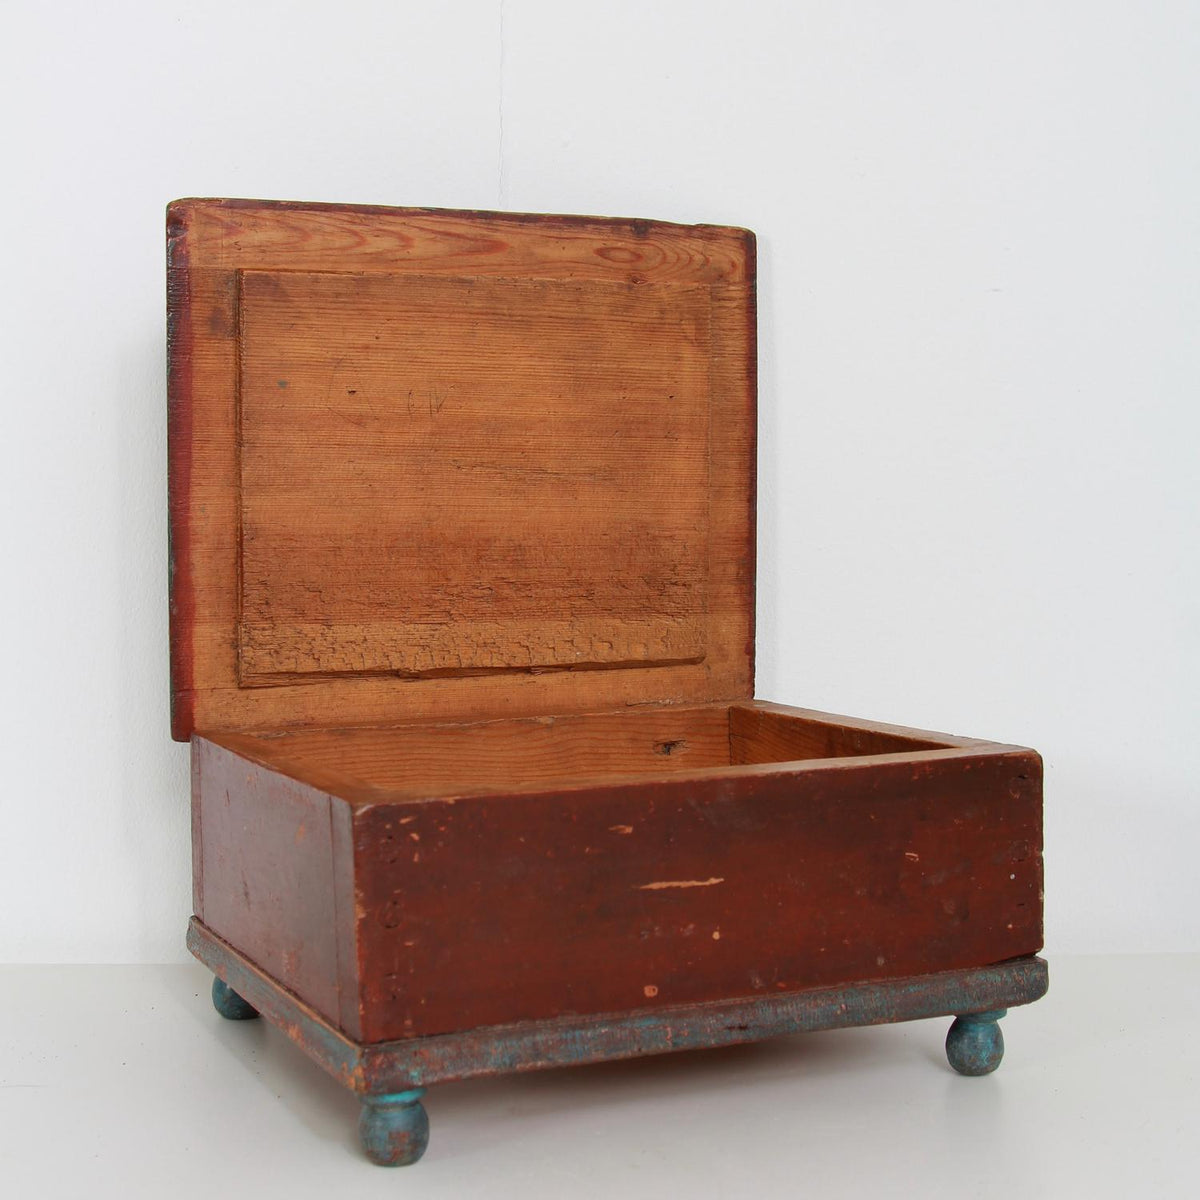 Early Swedish 19th Century Wooden Folk Art Box  Dated 1813